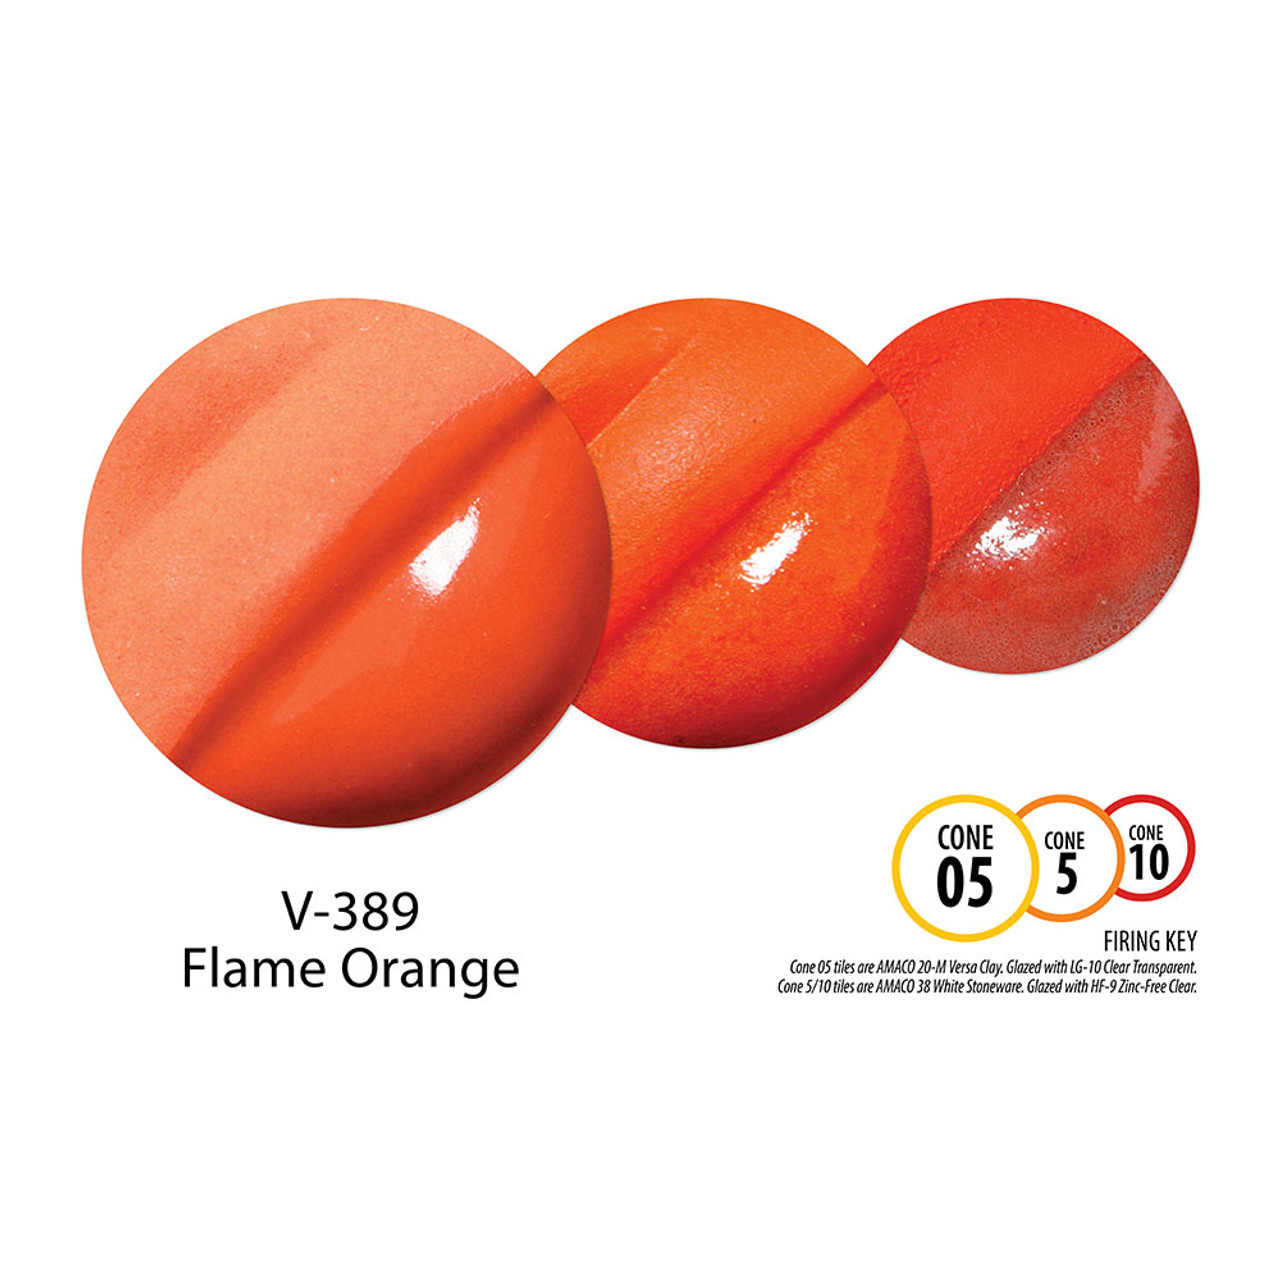 V-389 Flame Orange